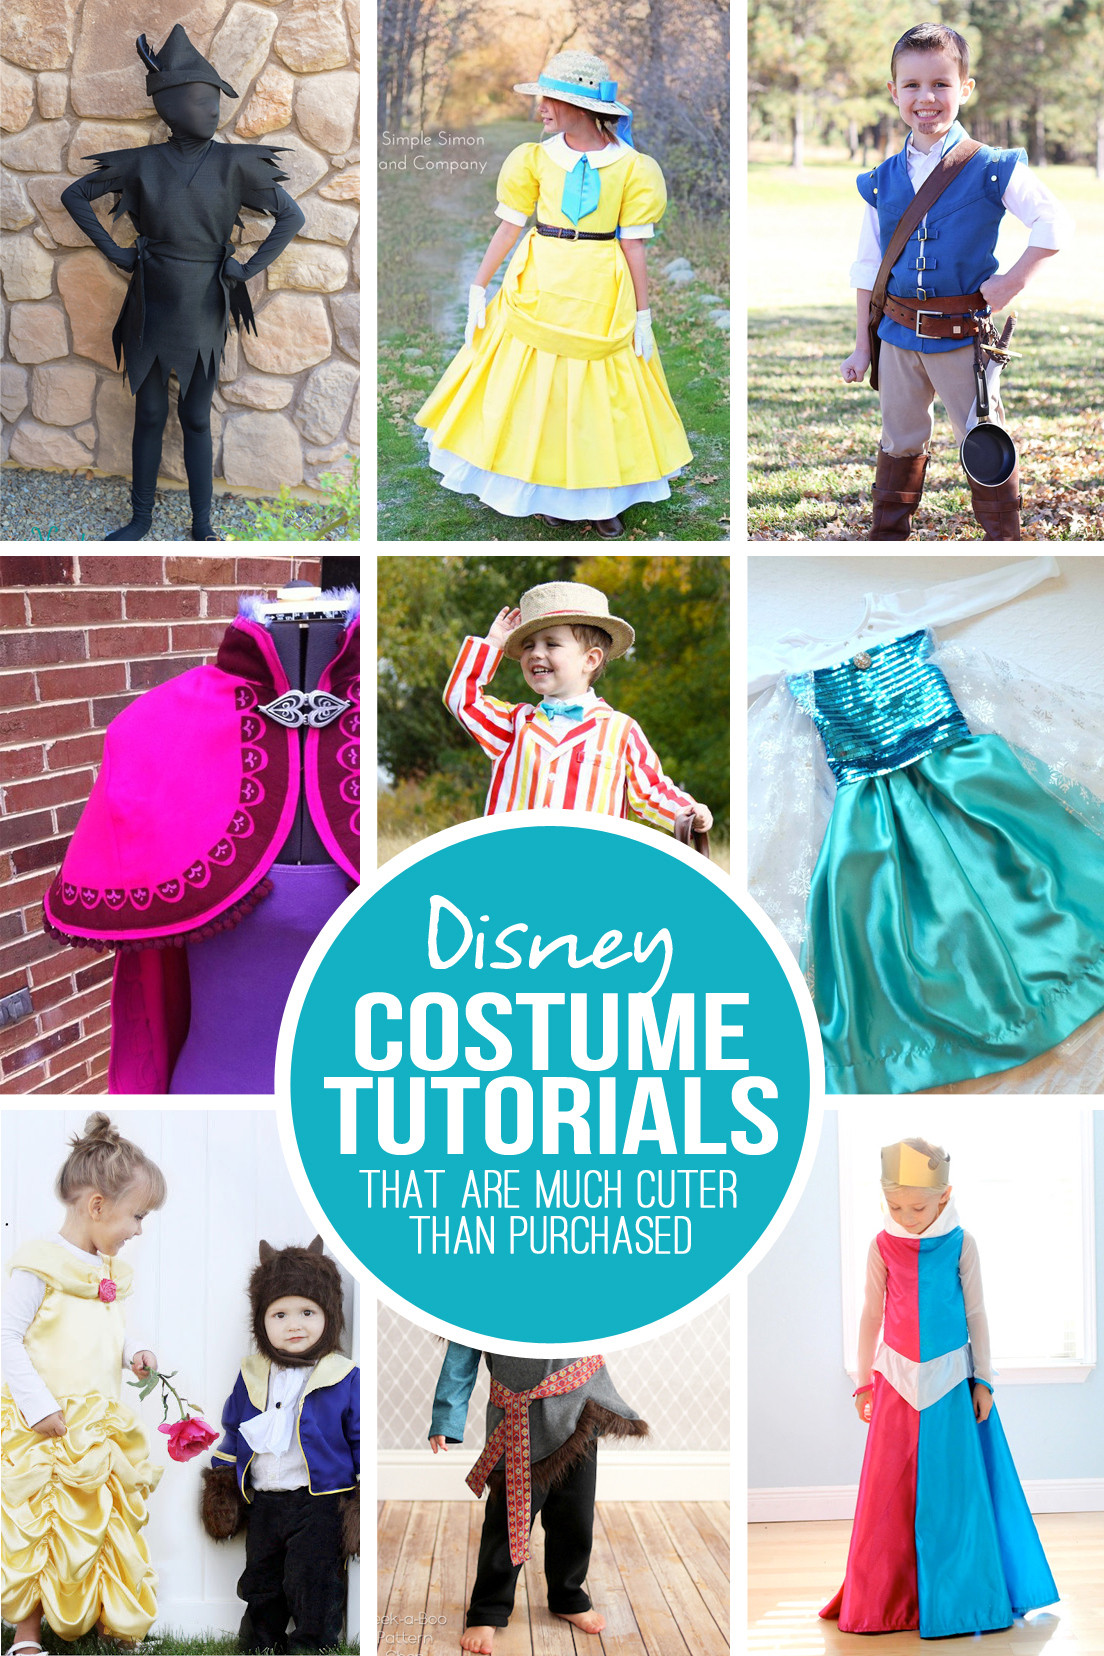 Best ideas about Disney Costume DIY
. Save or Pin A little sneak peek d some fun costume ideas Now.